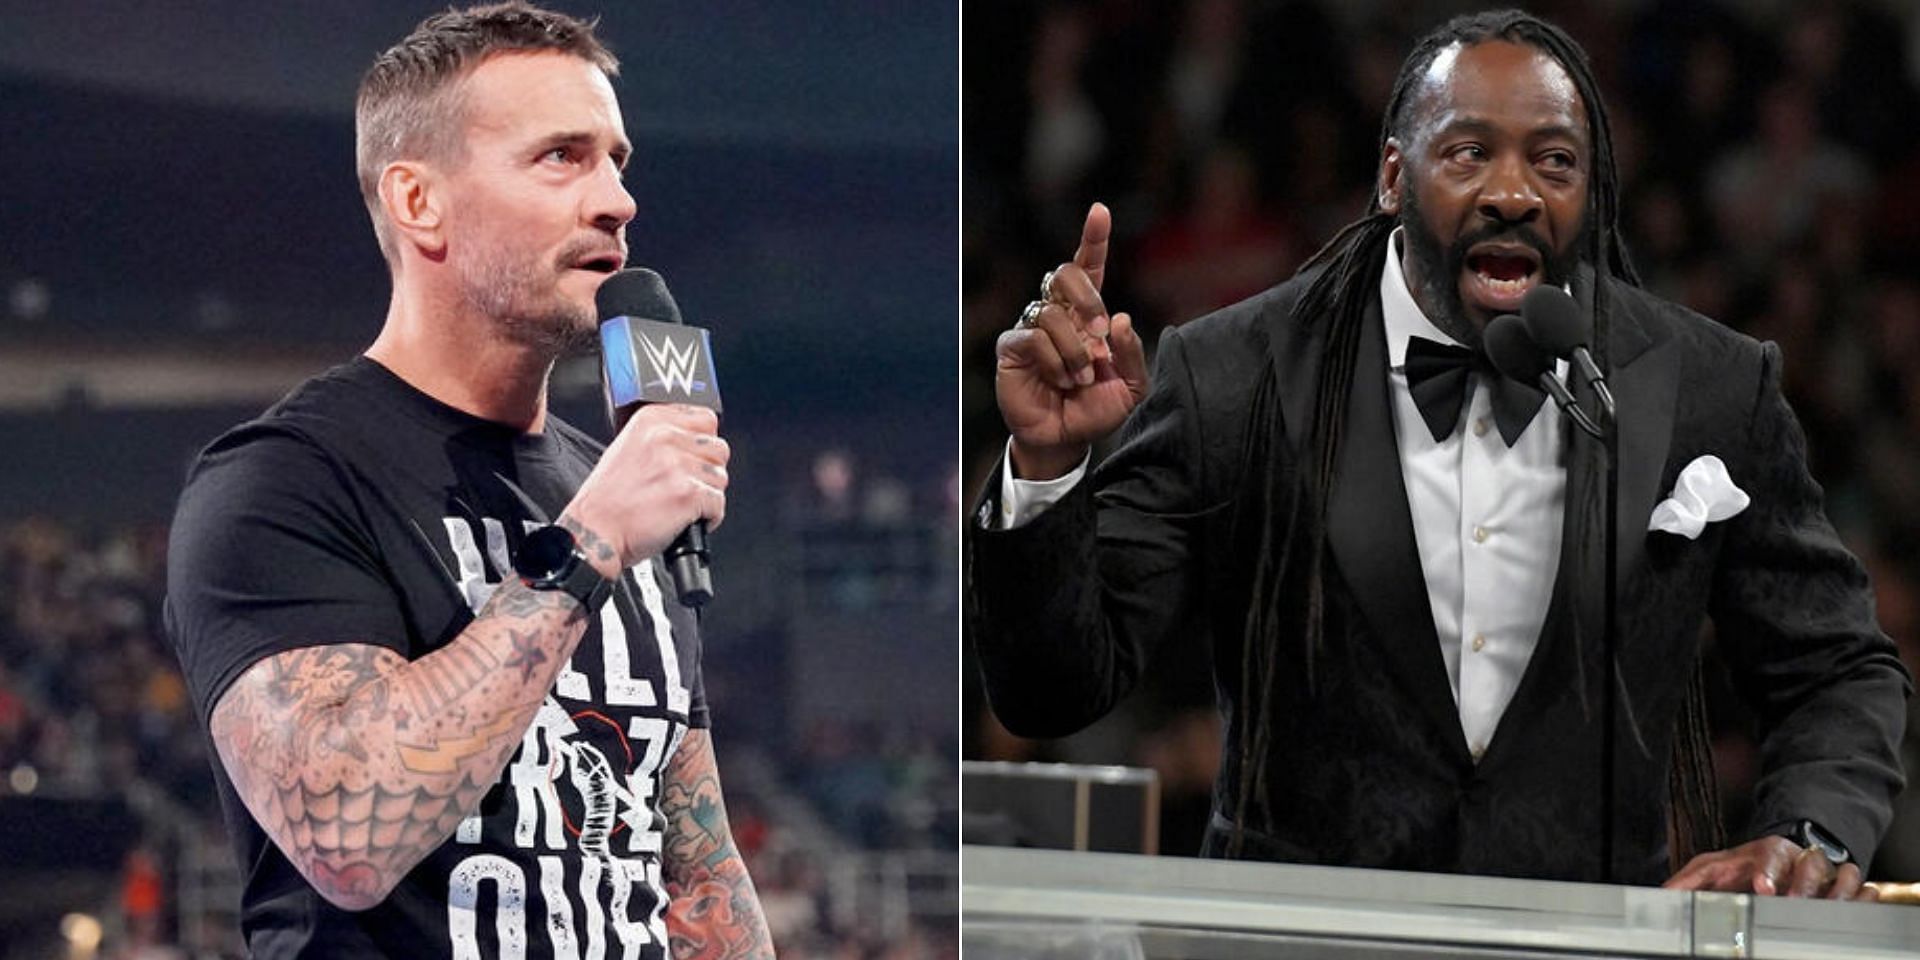 WWE Superstars CM Punk and Booker T